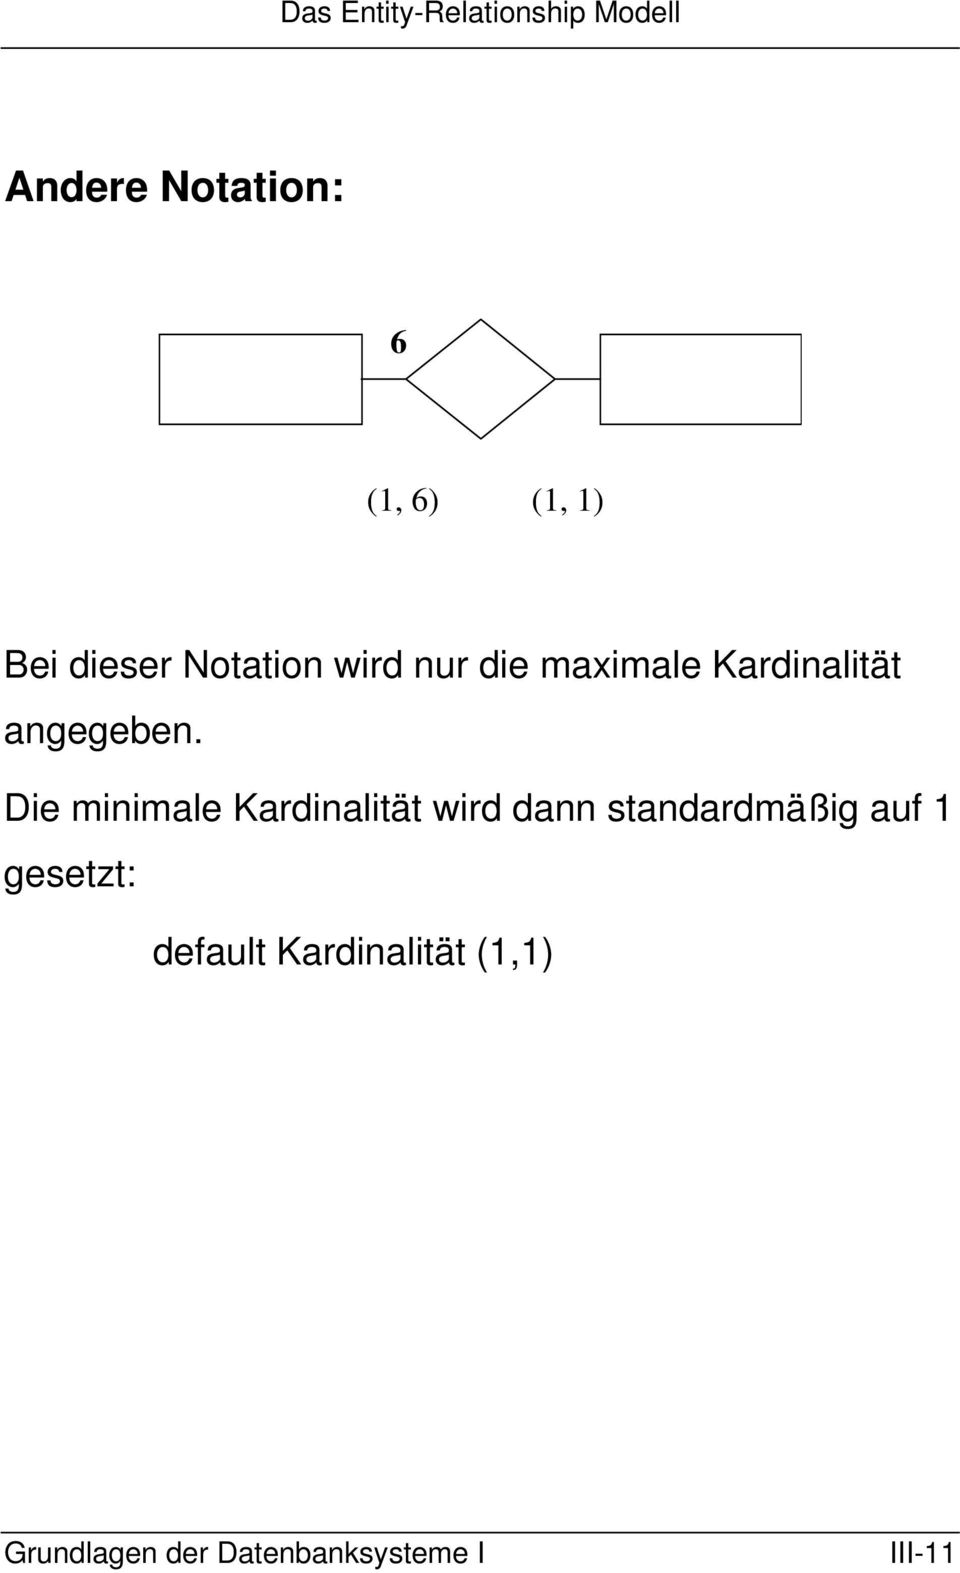 Das Entity-Relationship Modell (E-R Model) - Pdf Free Download inside Er Diagram Kardinalität